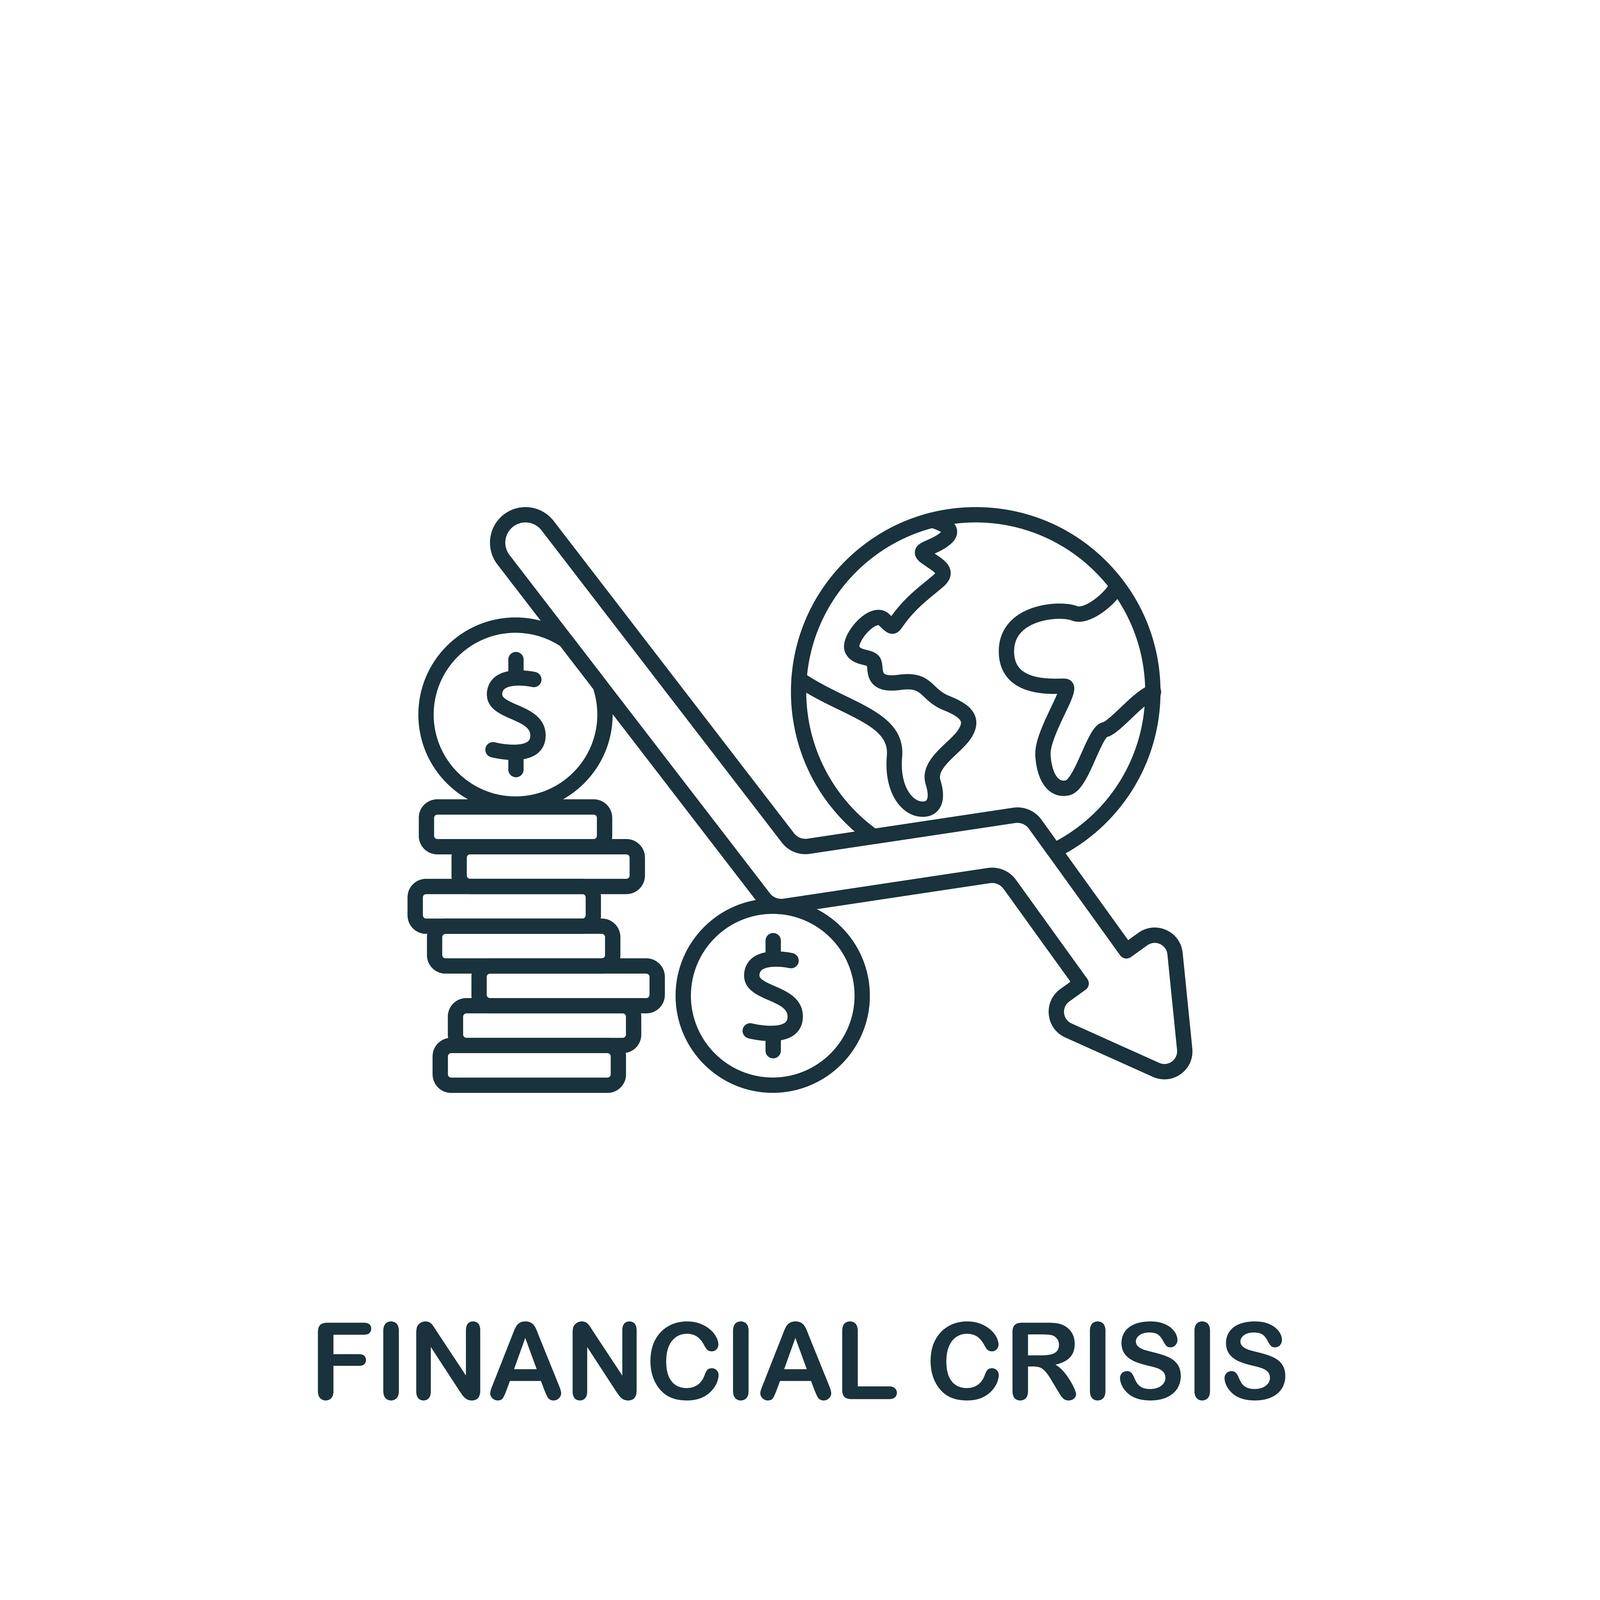 Financial Crisis icon line. Simple element economic crisis symbol for templates, web design and infographics.